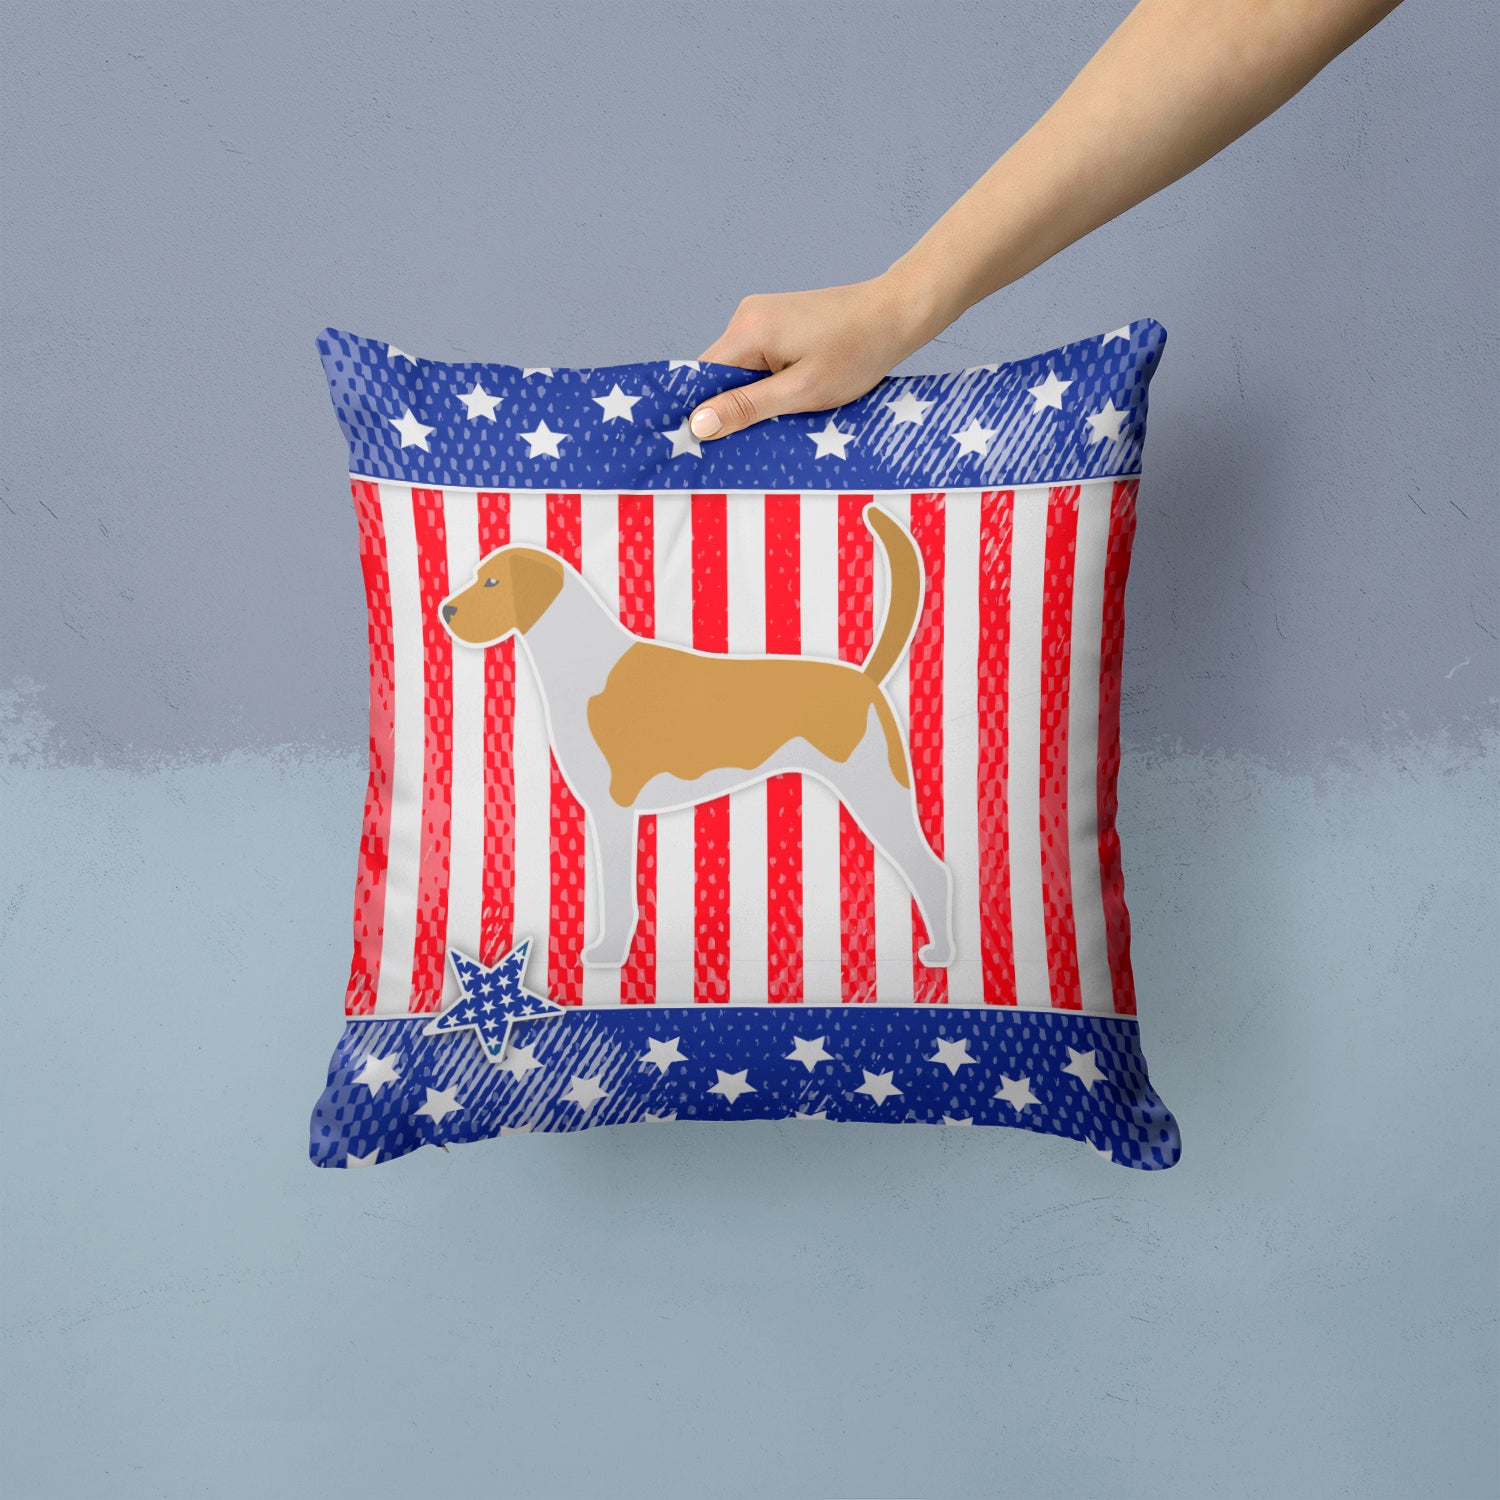 USA Patriotic American Foxhound Fabric Decorative Pillow BB3298PW1414 - the-store.com